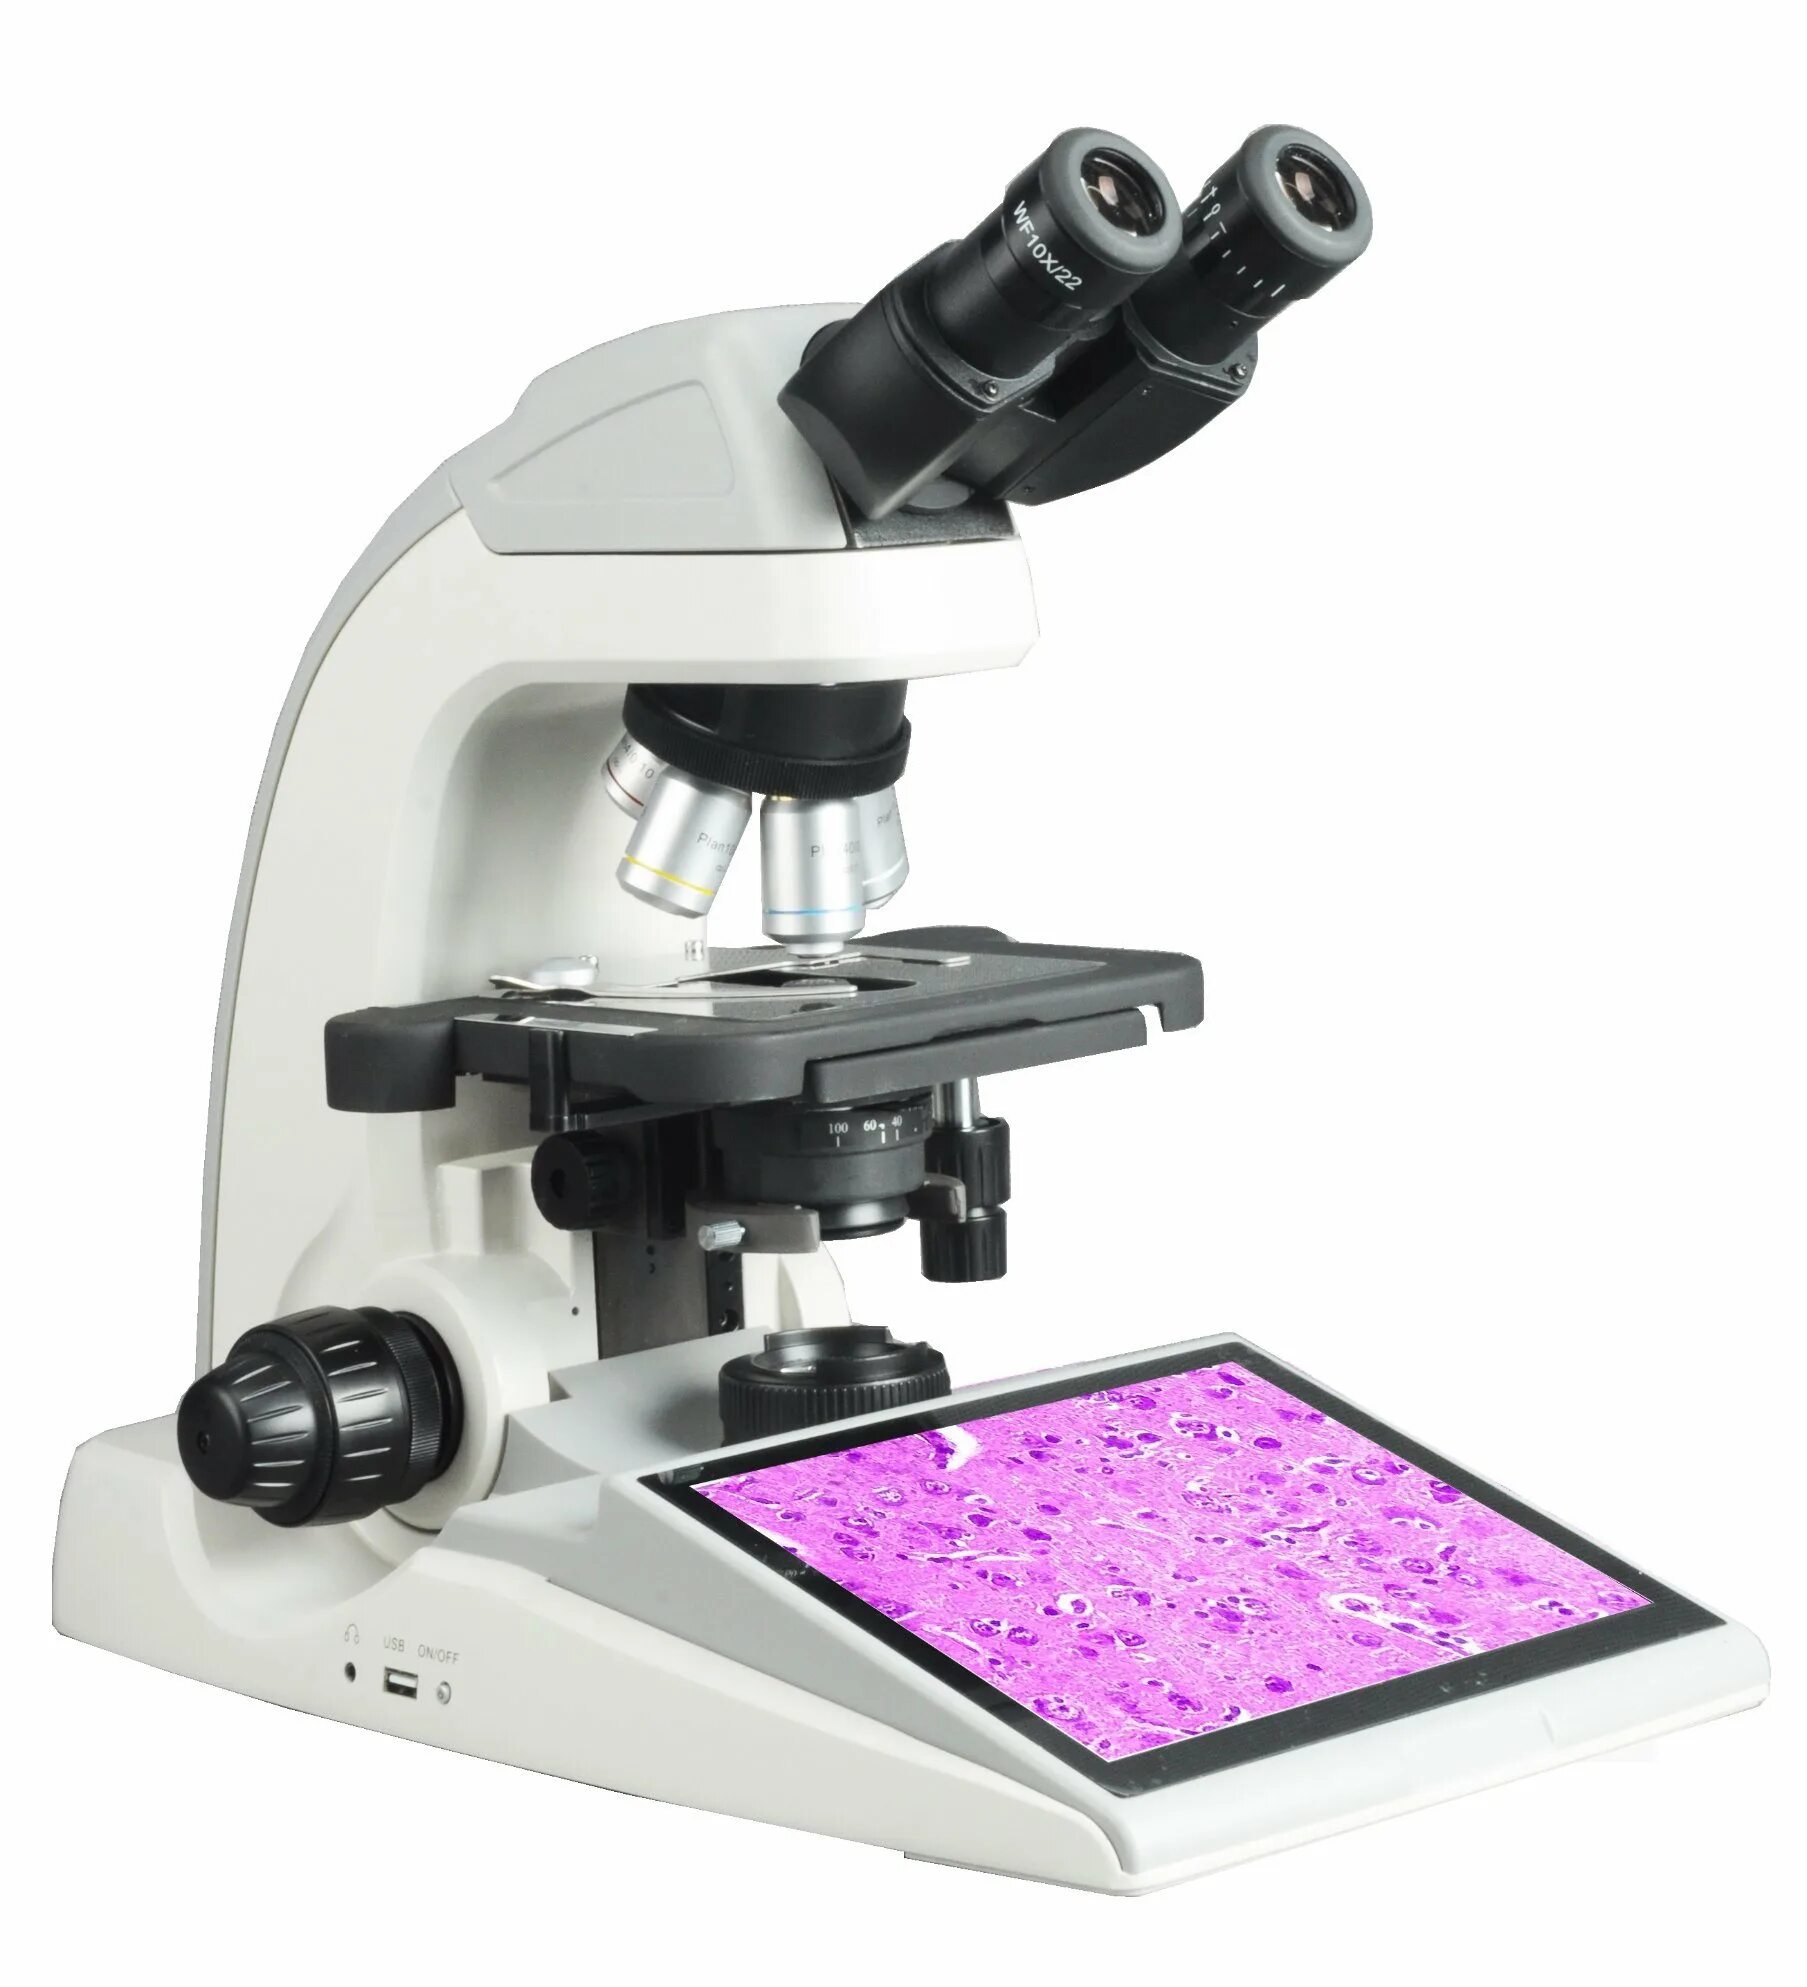 XTL-2300 микроскоп. Микроскоп мт5300lцена. Цифровой микроскоп Микромед. Микроскоп бинокулярный мт5300.